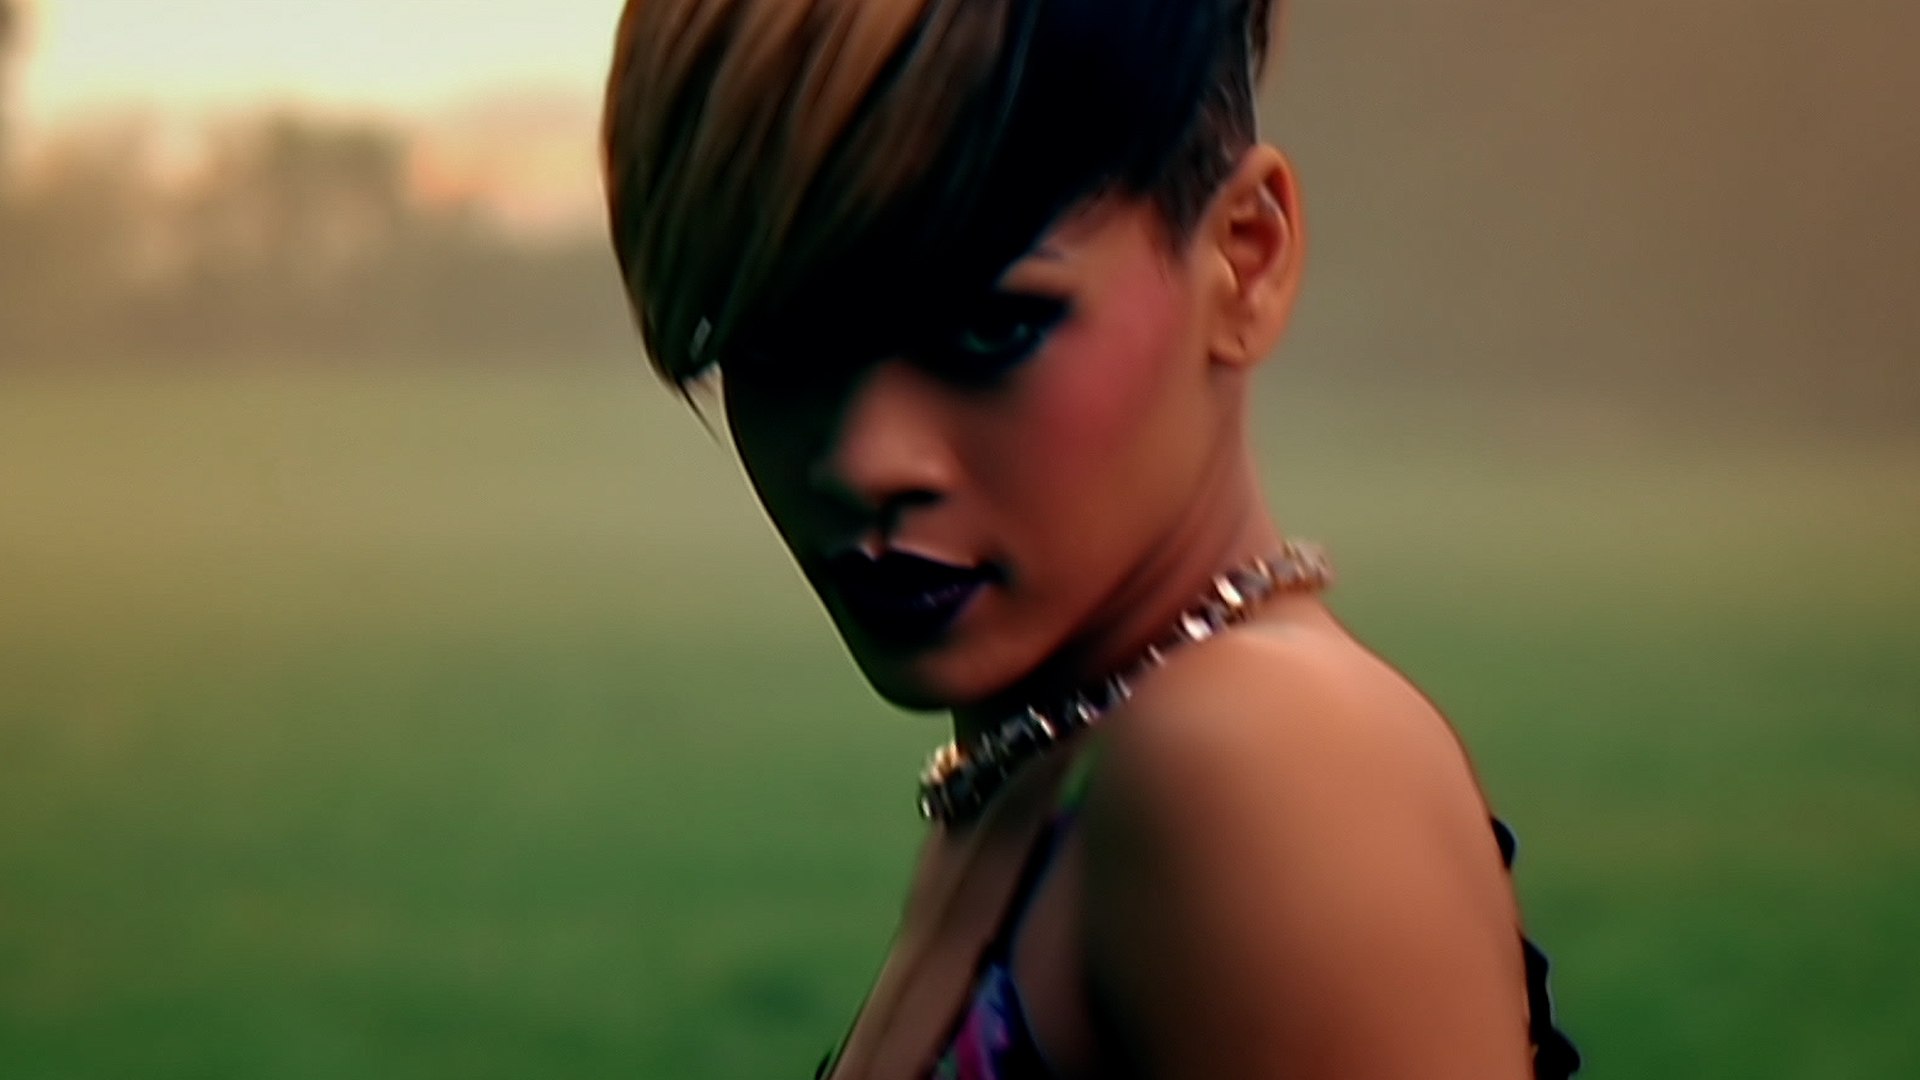 Rihanna Desperado Lyrics - - Vidéo Dailymotion